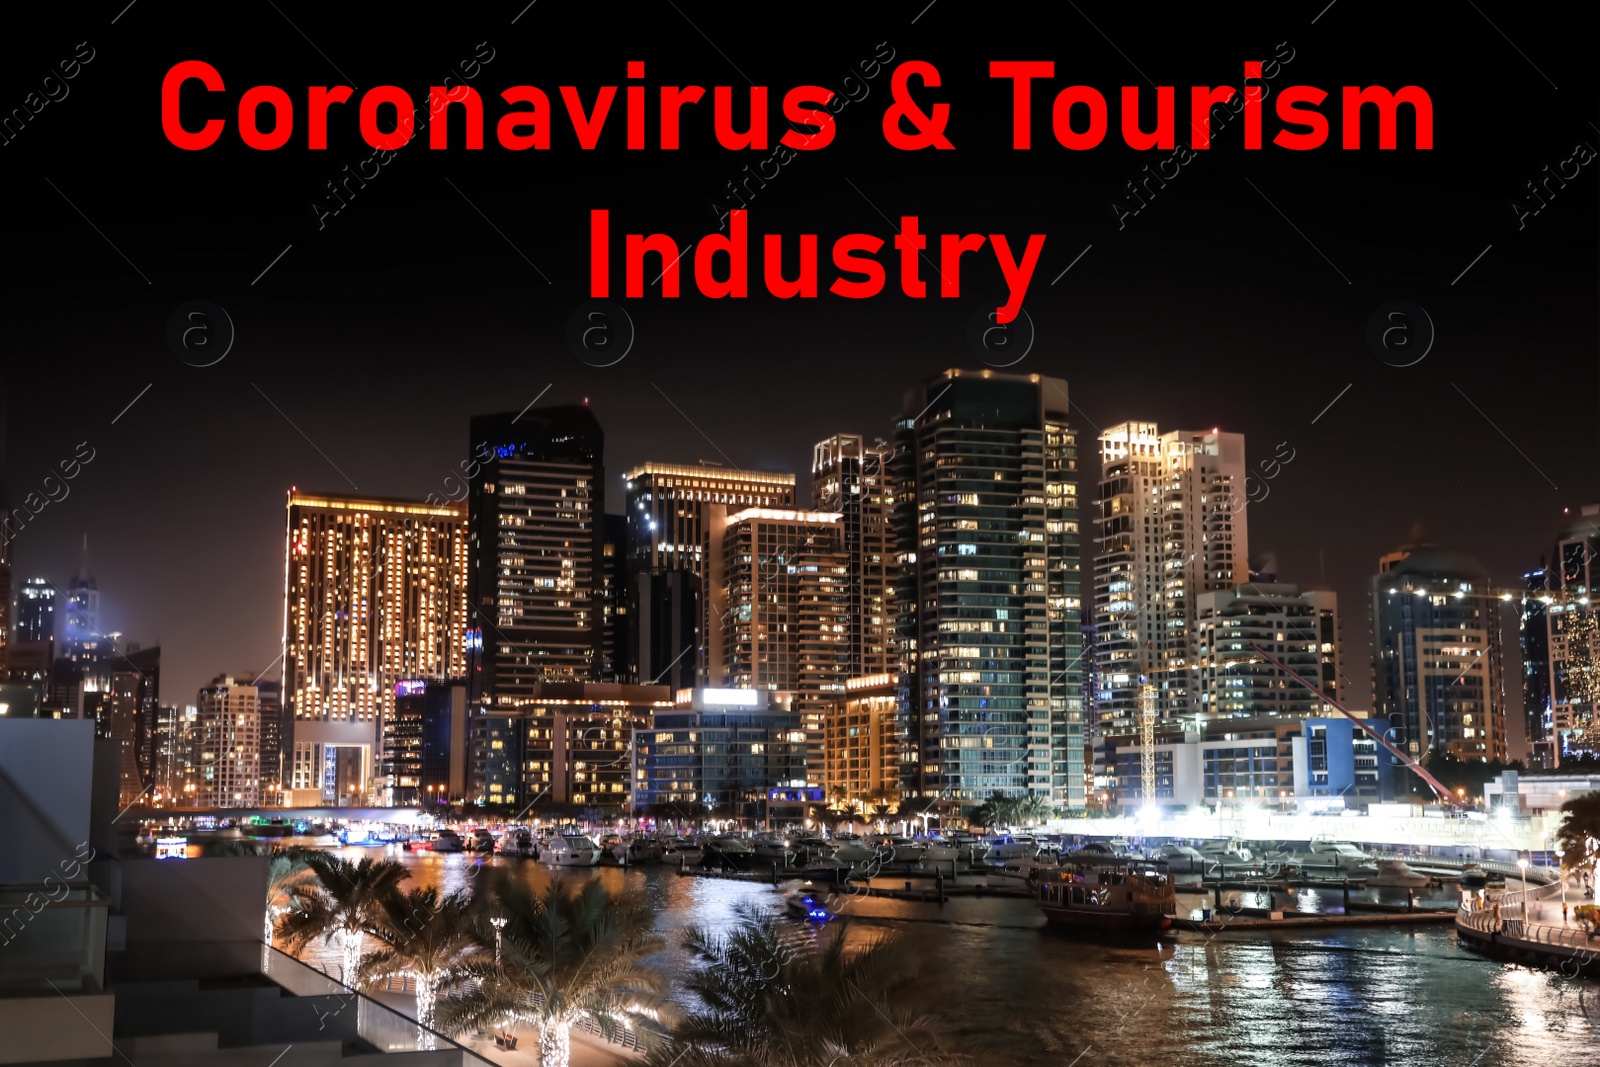 Image of Trips cancellation during coronavirus quarantine. Night cityscape with illuminated buildings